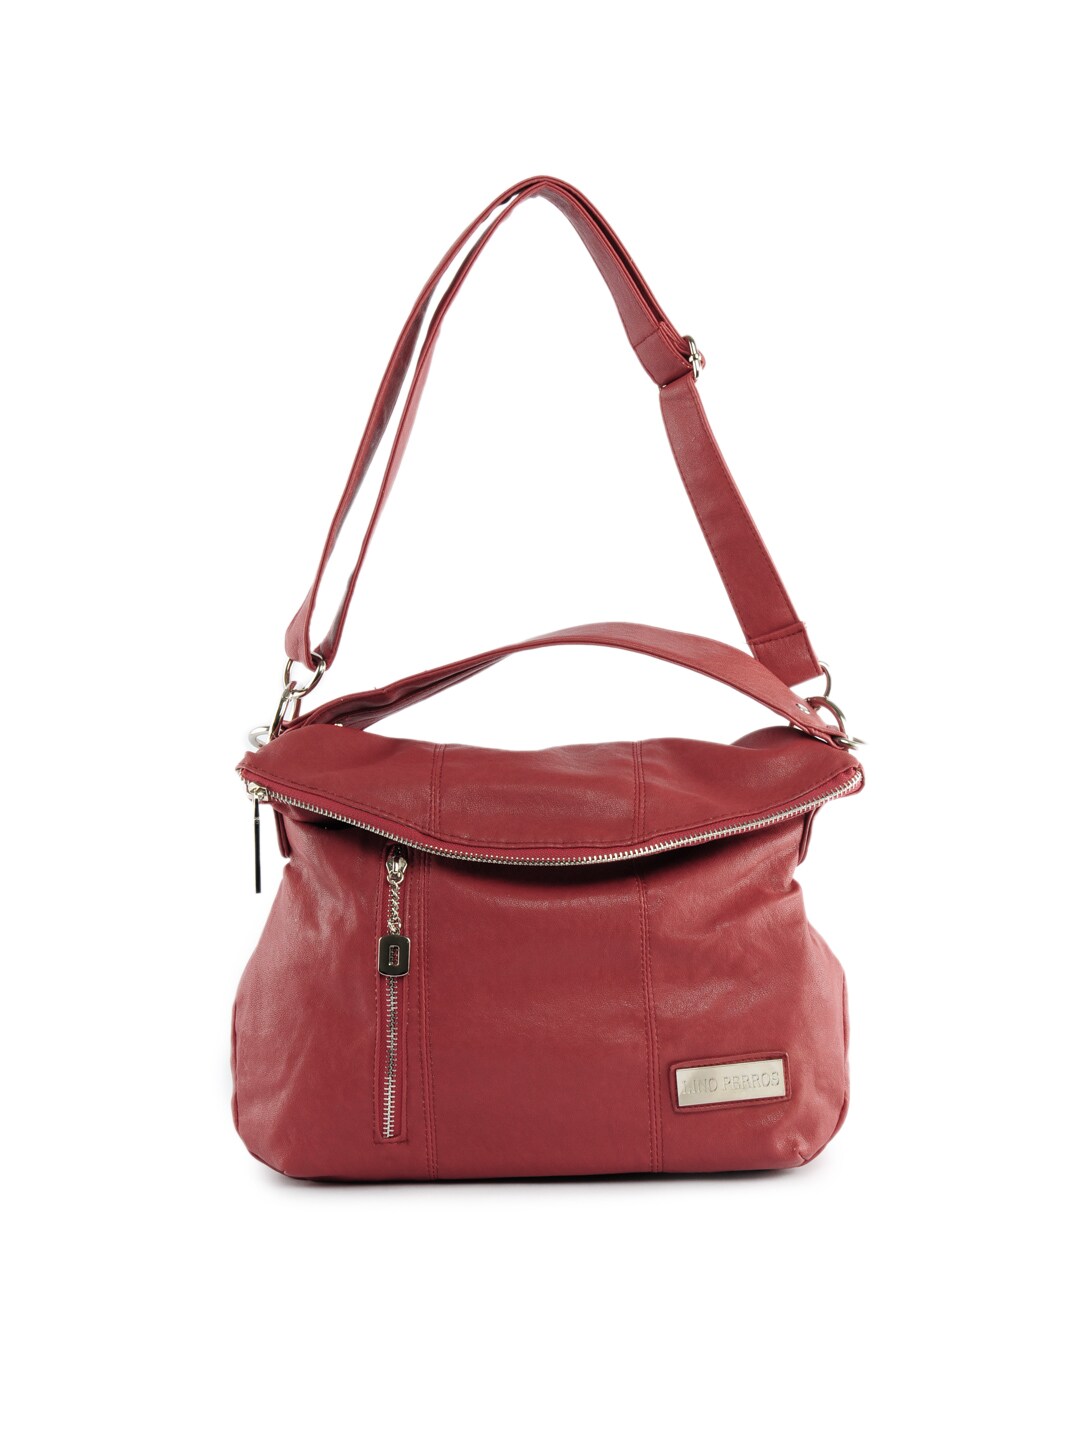 Lino Perros Women Leatherite Red Handbag